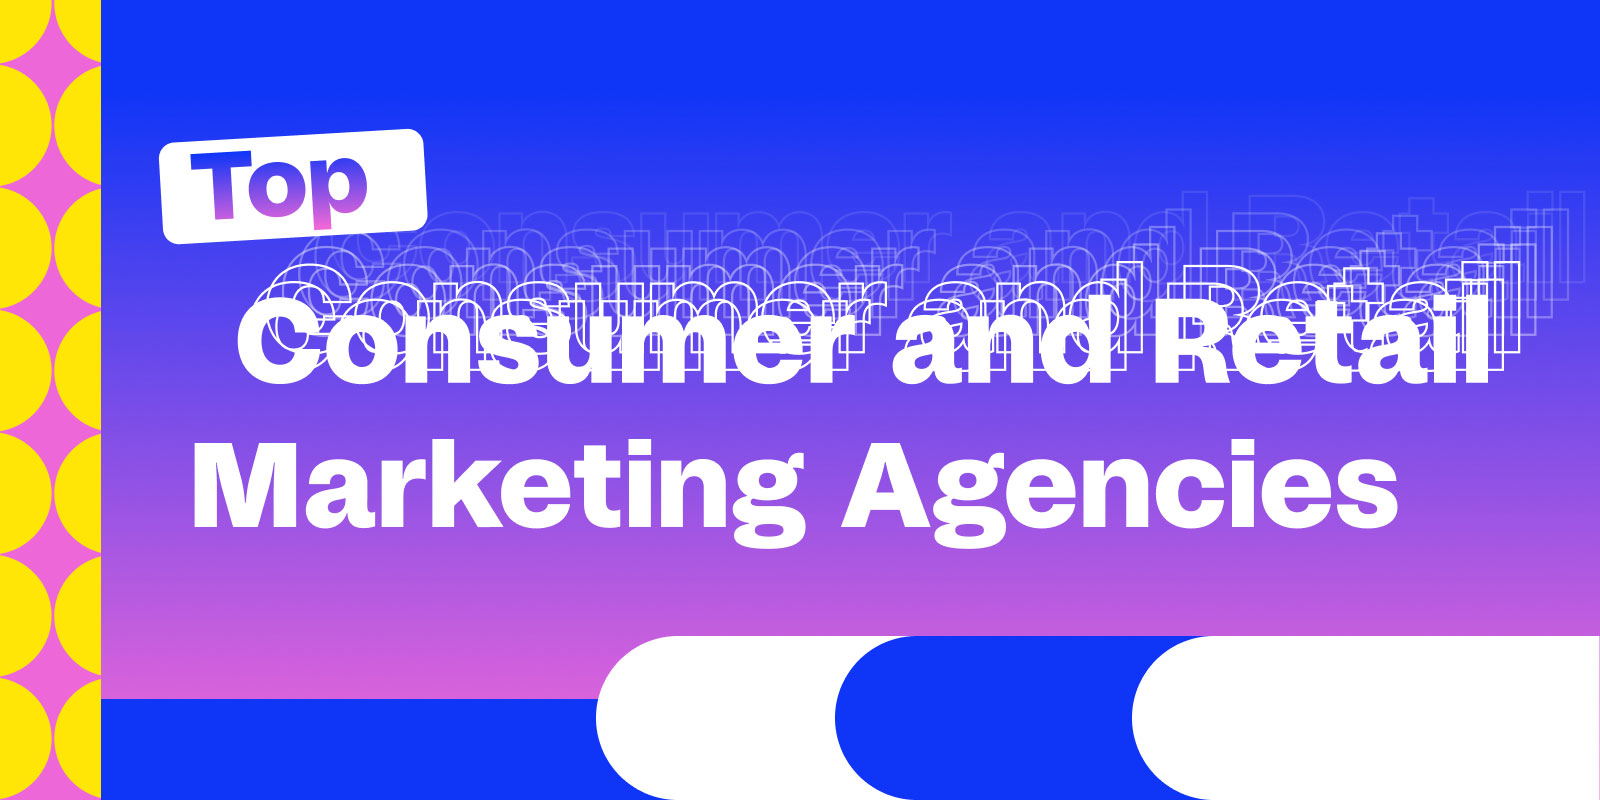 Top Consumer and Retail Marketing Agencies